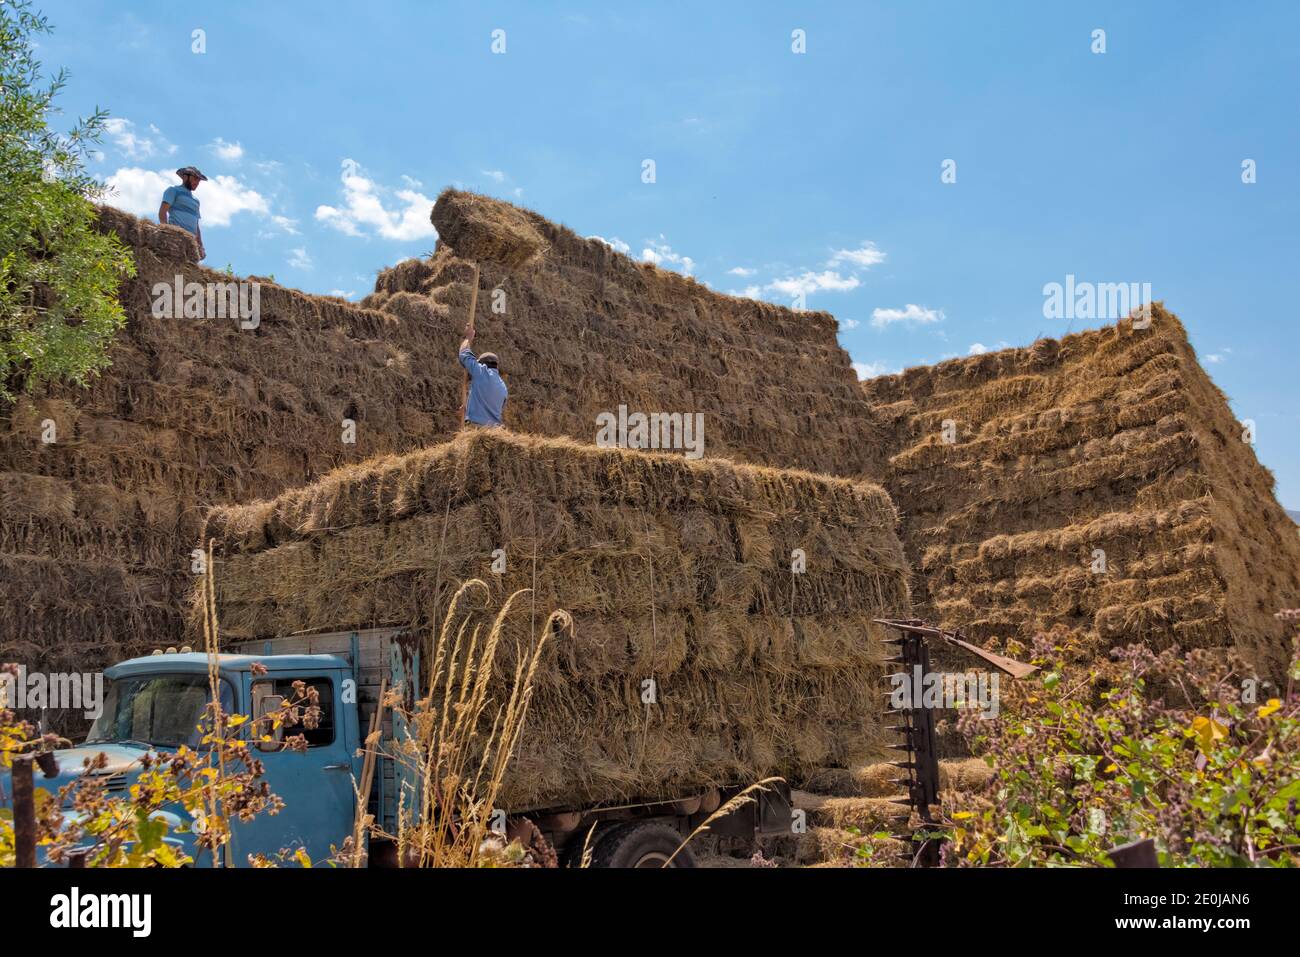 Farmers making haystack on a farm, Armenia Stock Photo